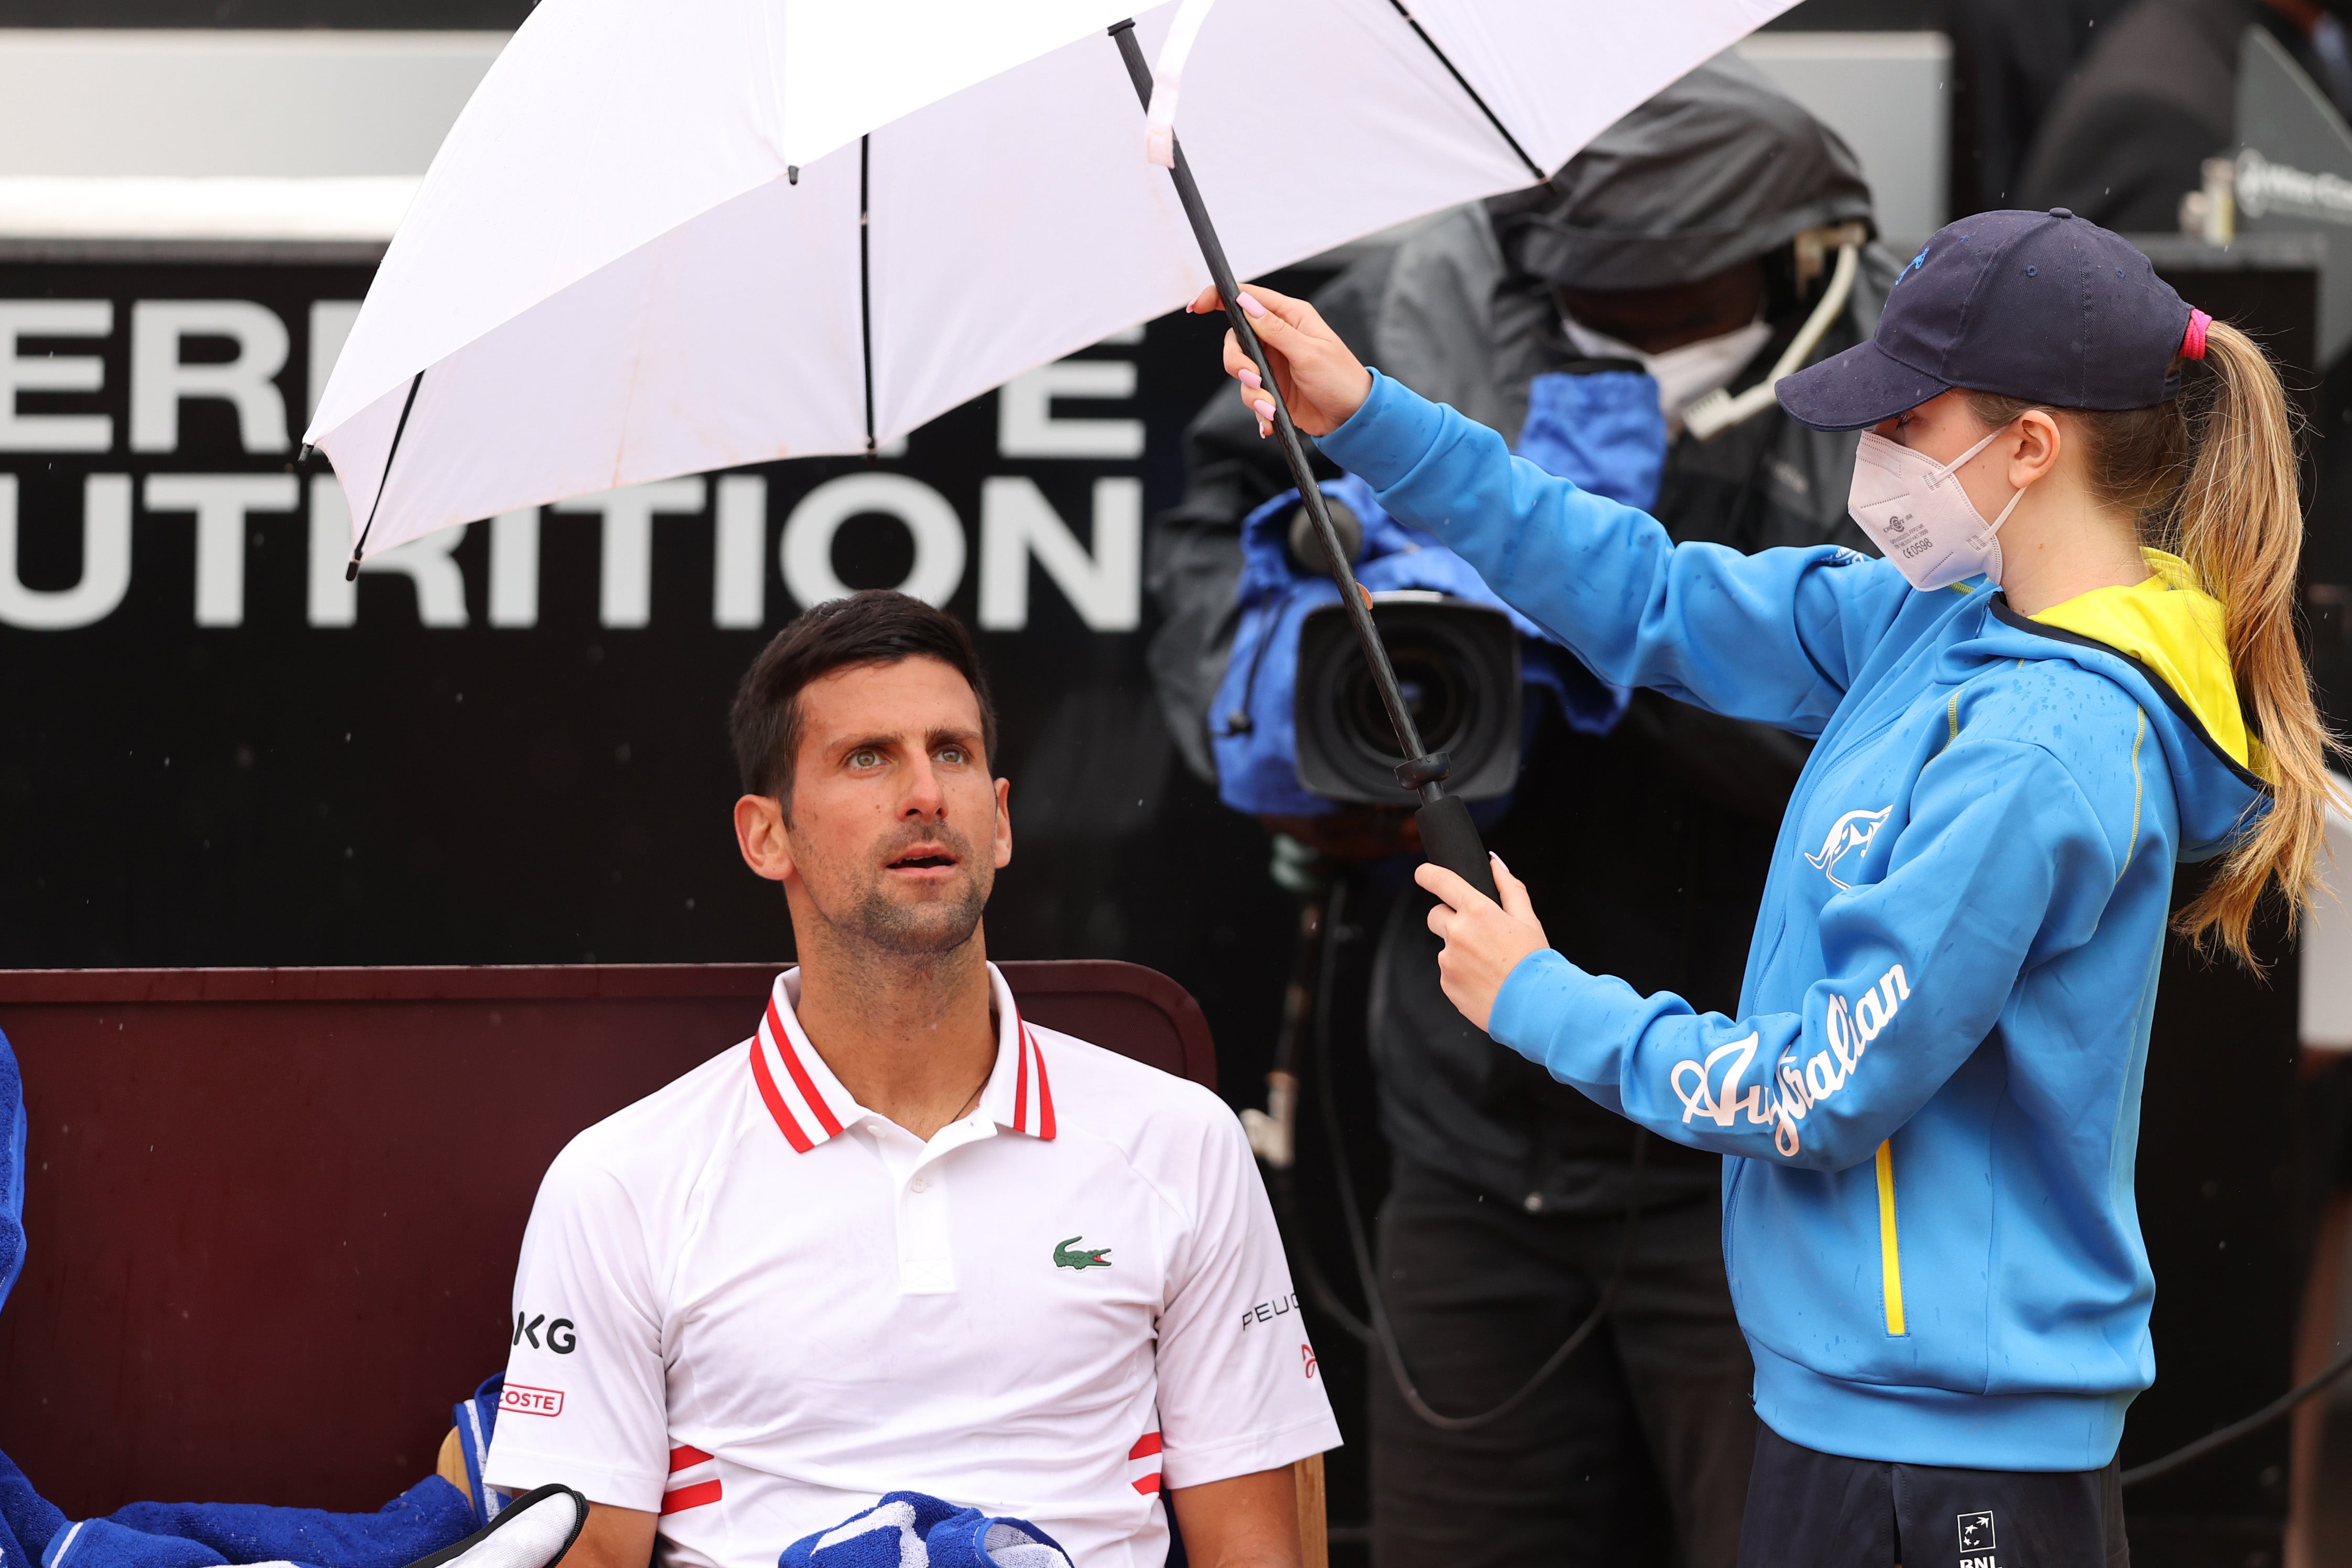 Novak Djokovic eventually progressed to the last-16 after a rain delay